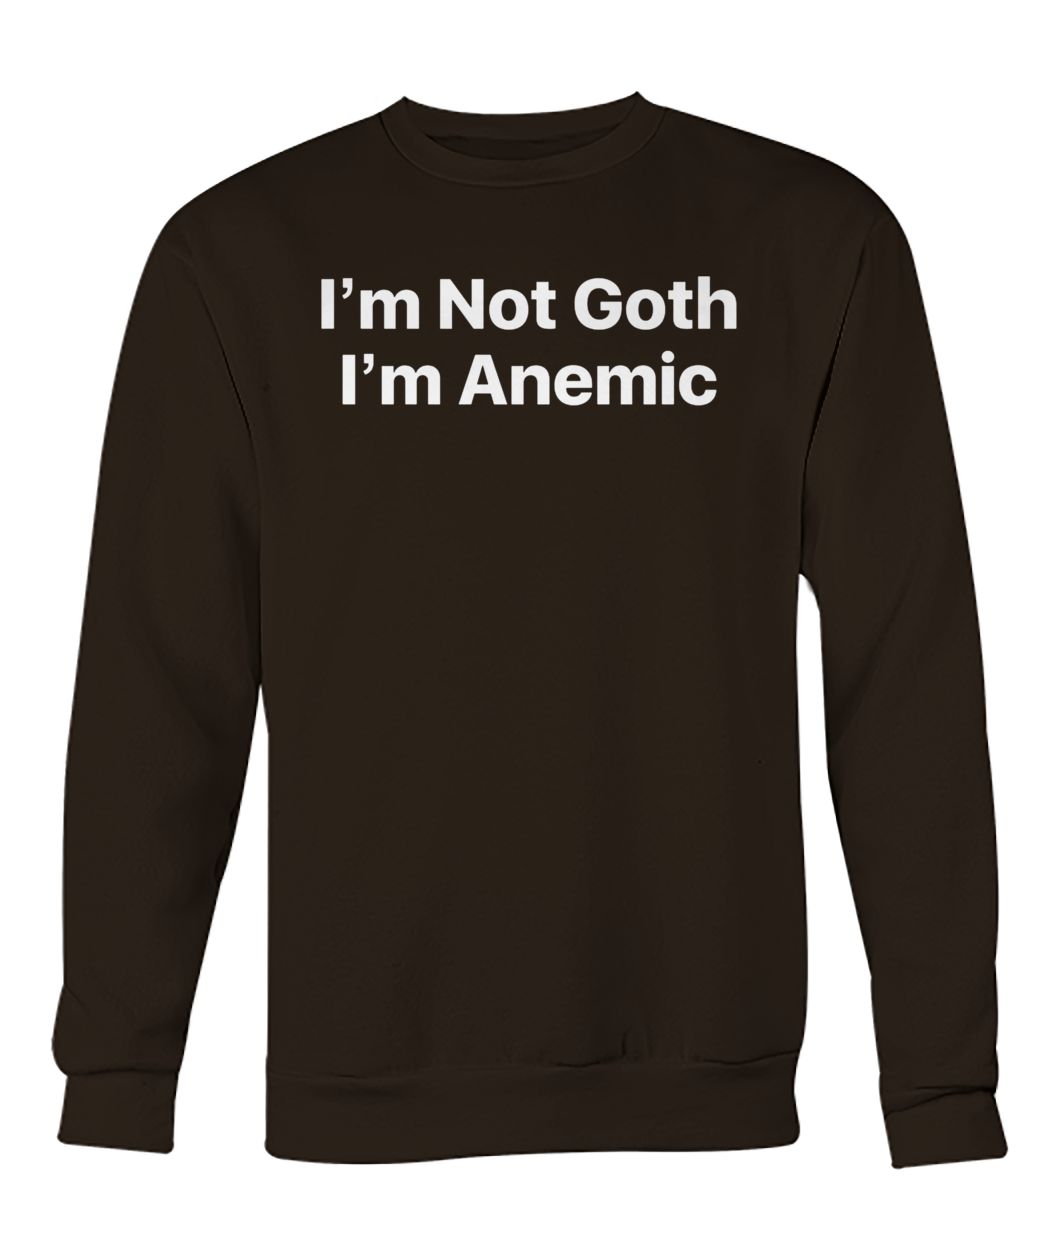 I'm not goth I'm anemic crew neck sweatshirt